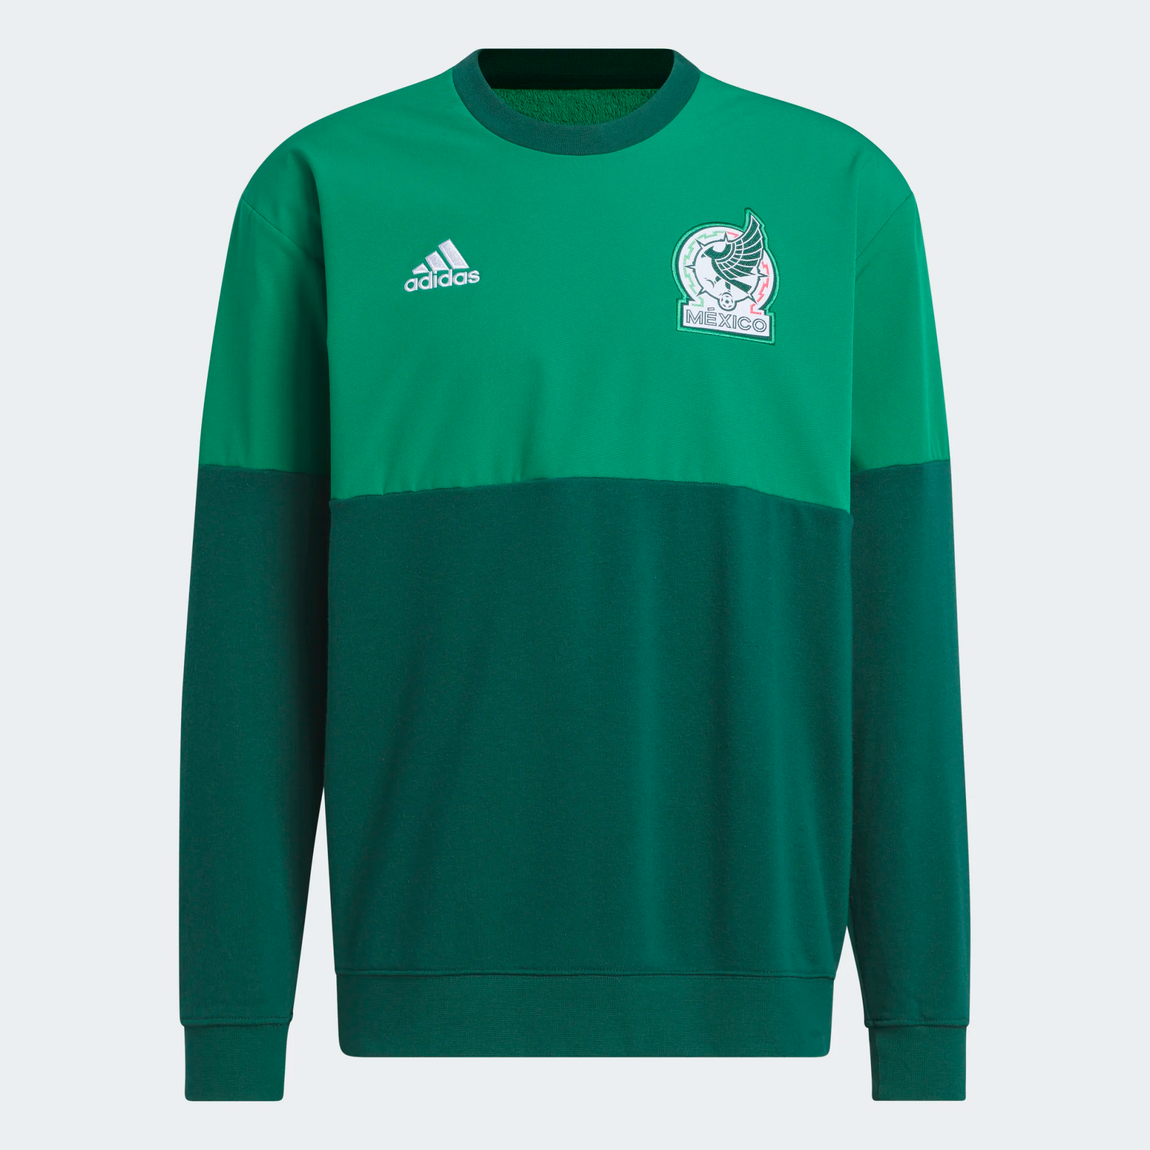 Adidas Mexico Woven Sweatshirt (Collegiate Green/Vivid Green) - Adidas Mexico Woven Sweatshirt (Collegiate Green/Vivid Green) - 